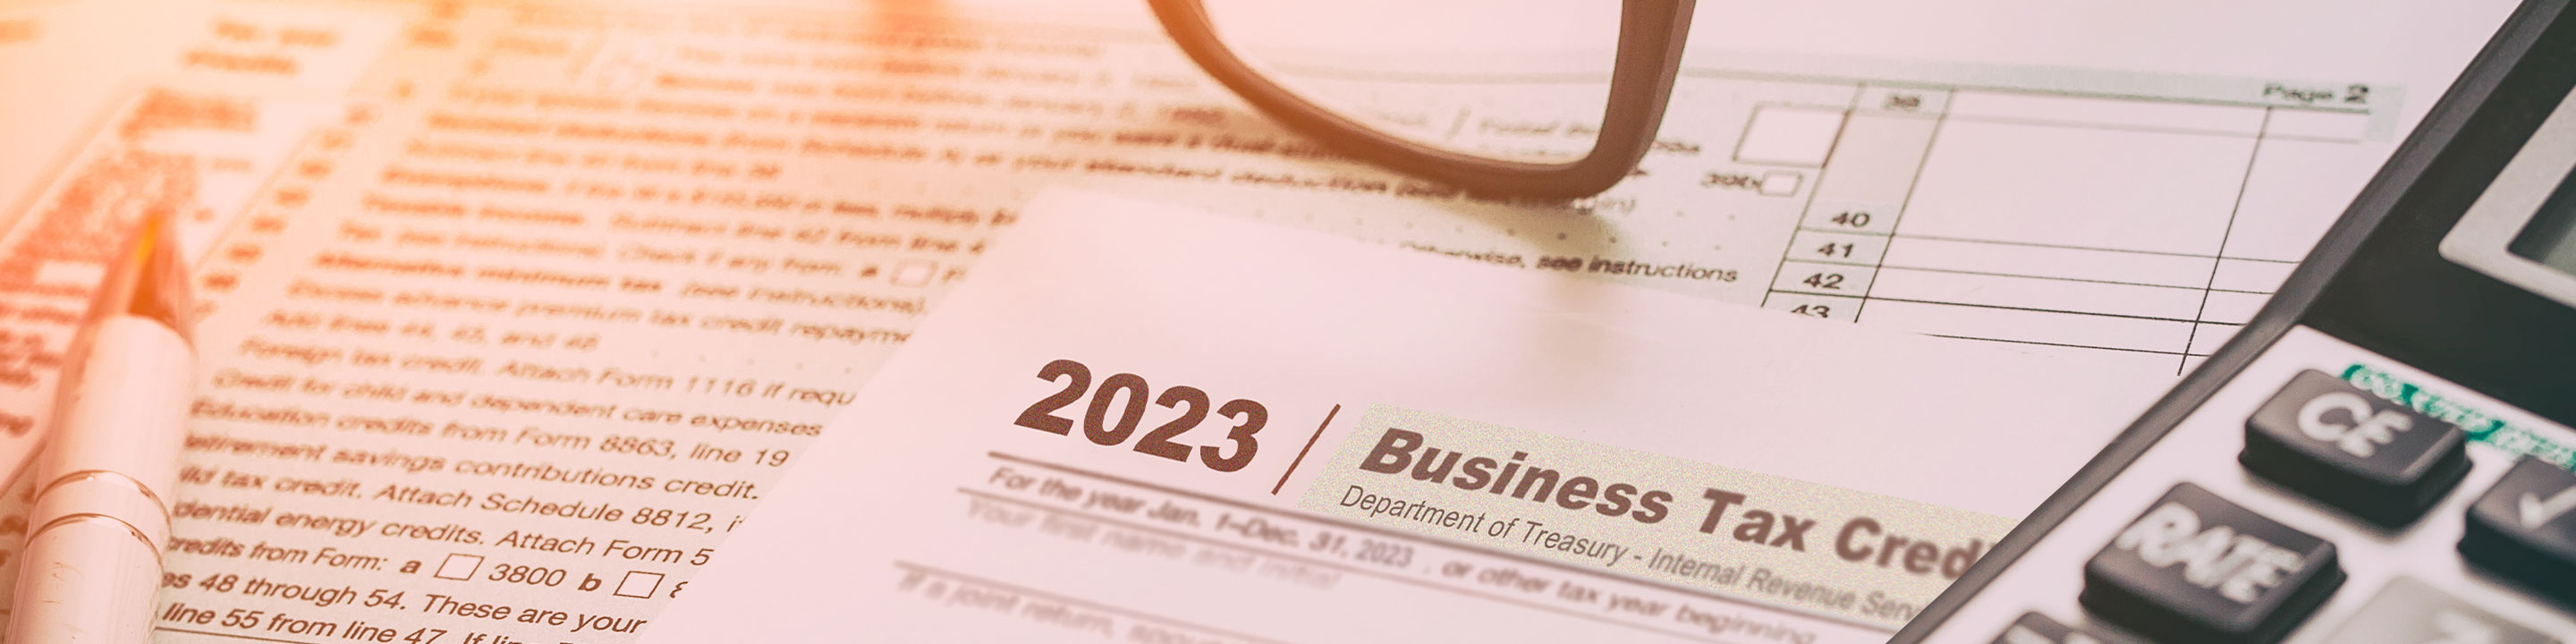 Business Tax Credits 2023